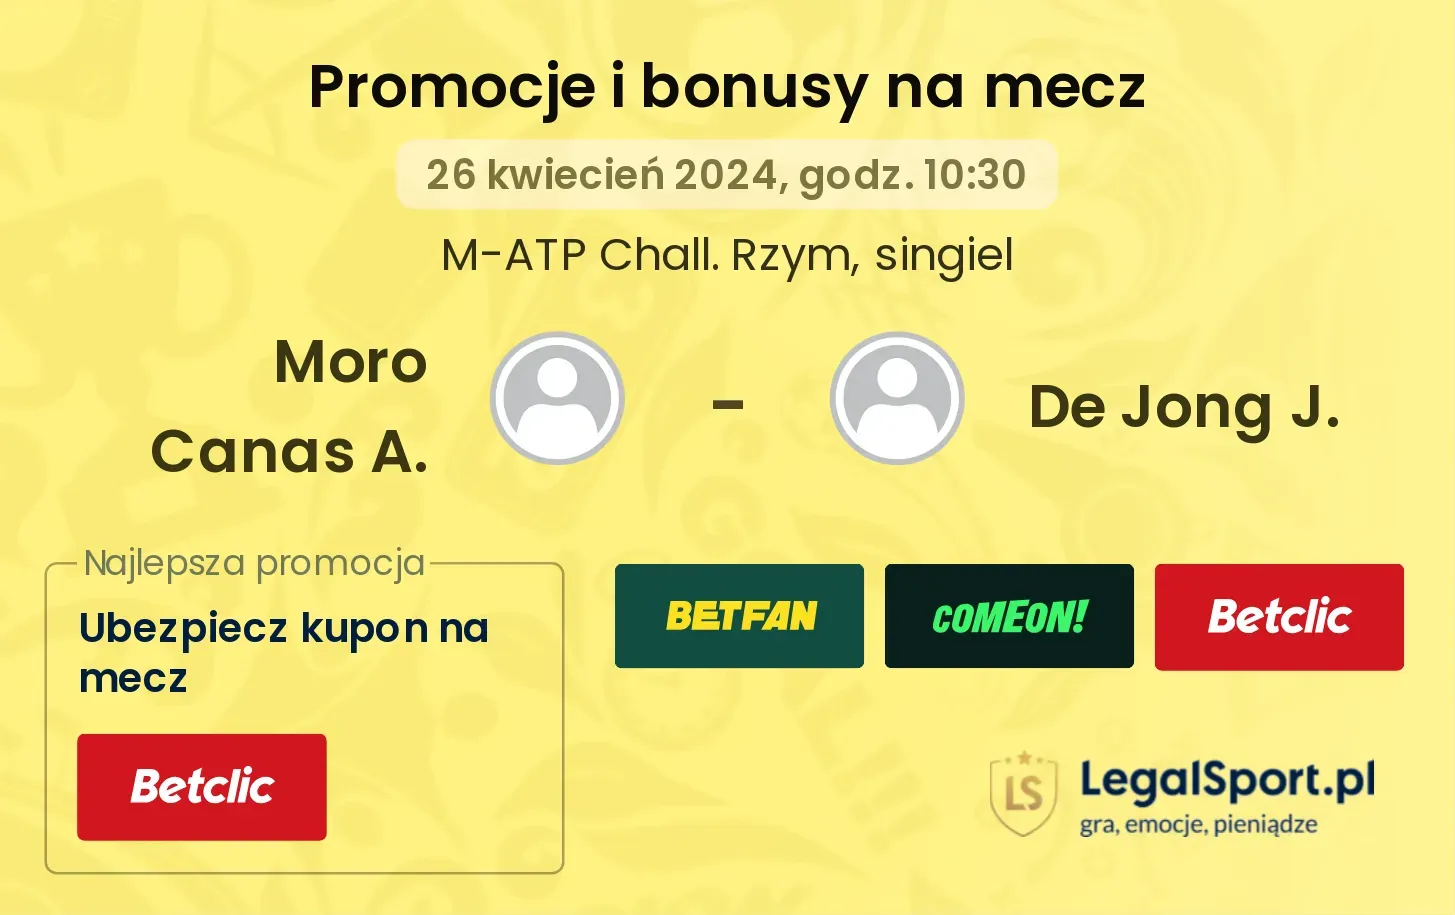 Moro Canas A. - De Jong J. promocje bonusy na mecz